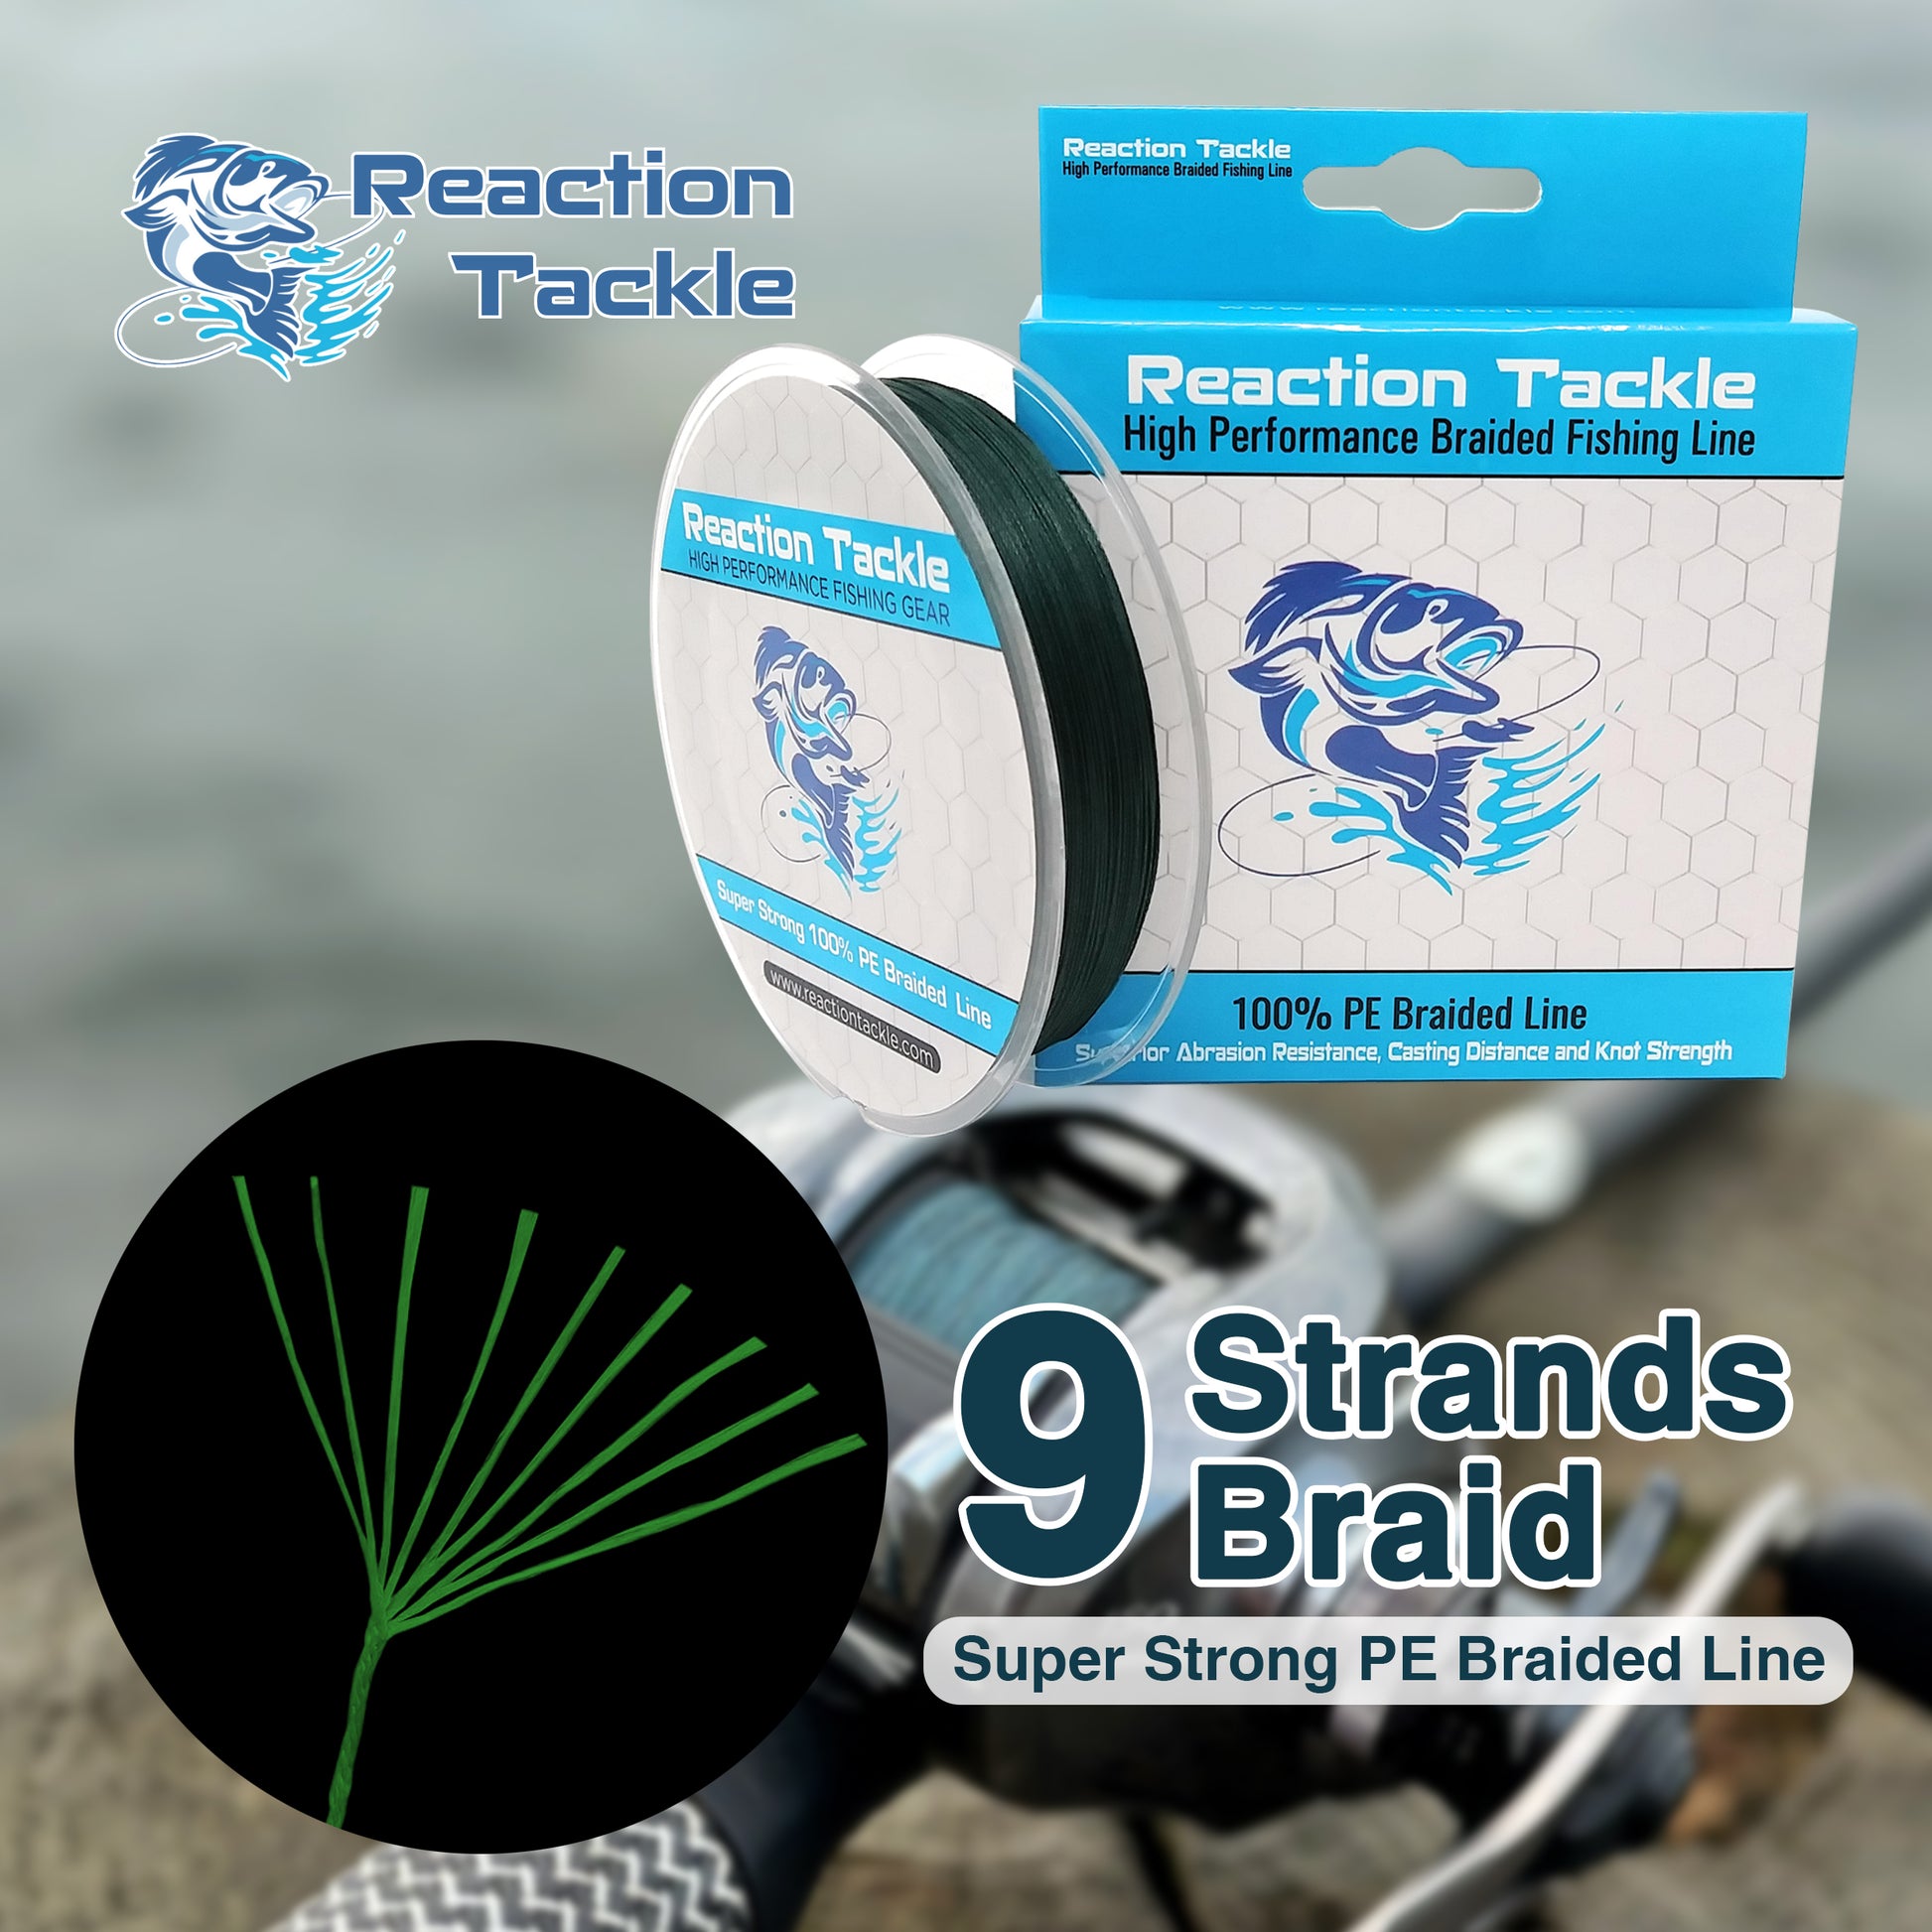 Reaction Tackle Braided Fishing Line - Pro Grade Nigeria